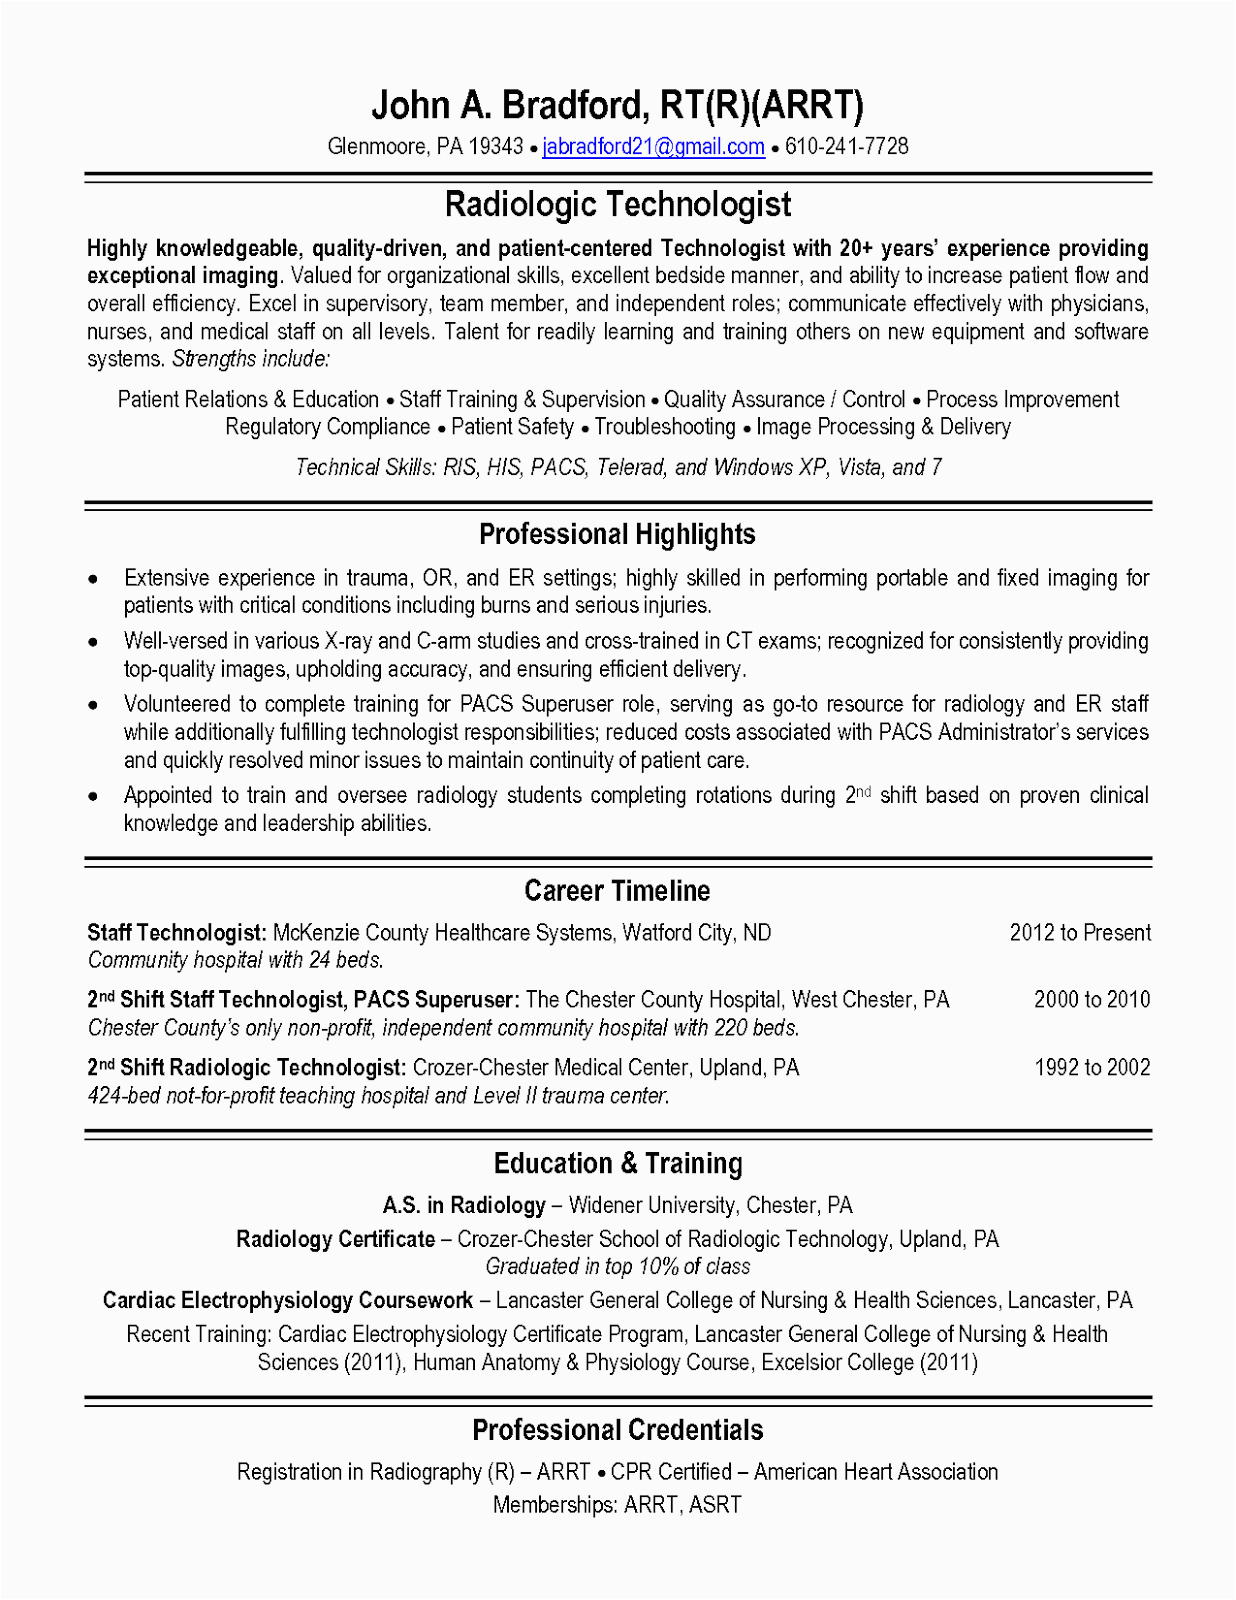 Radiologic Technologist Sample Resume Entry Level Entry Level X Ray Tech Resume